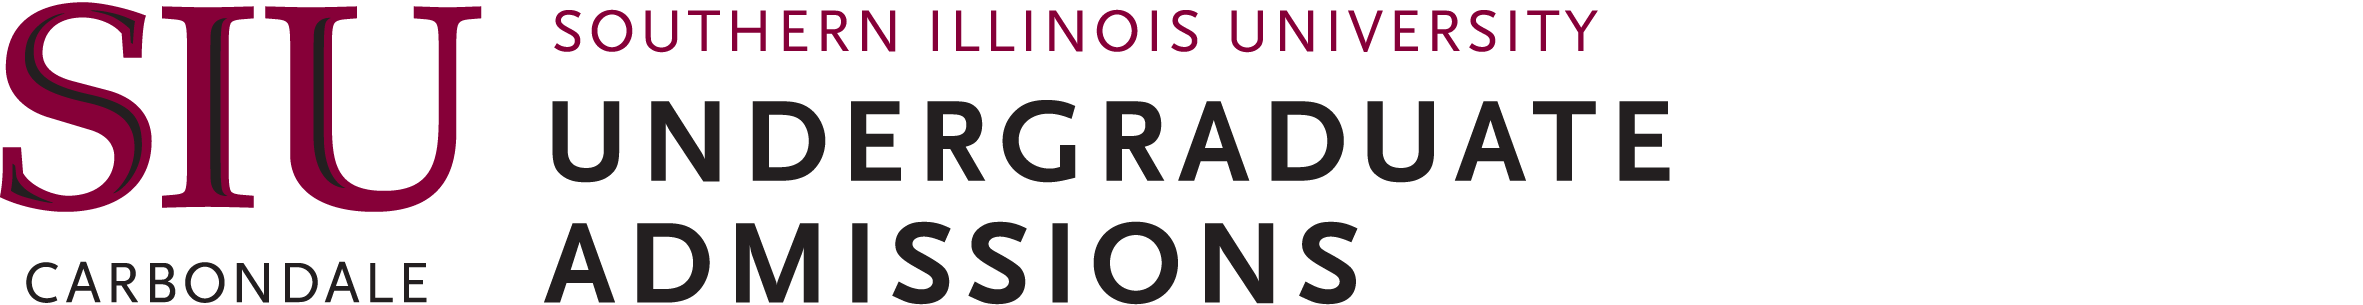 SIU Undergraduate Admissions logo